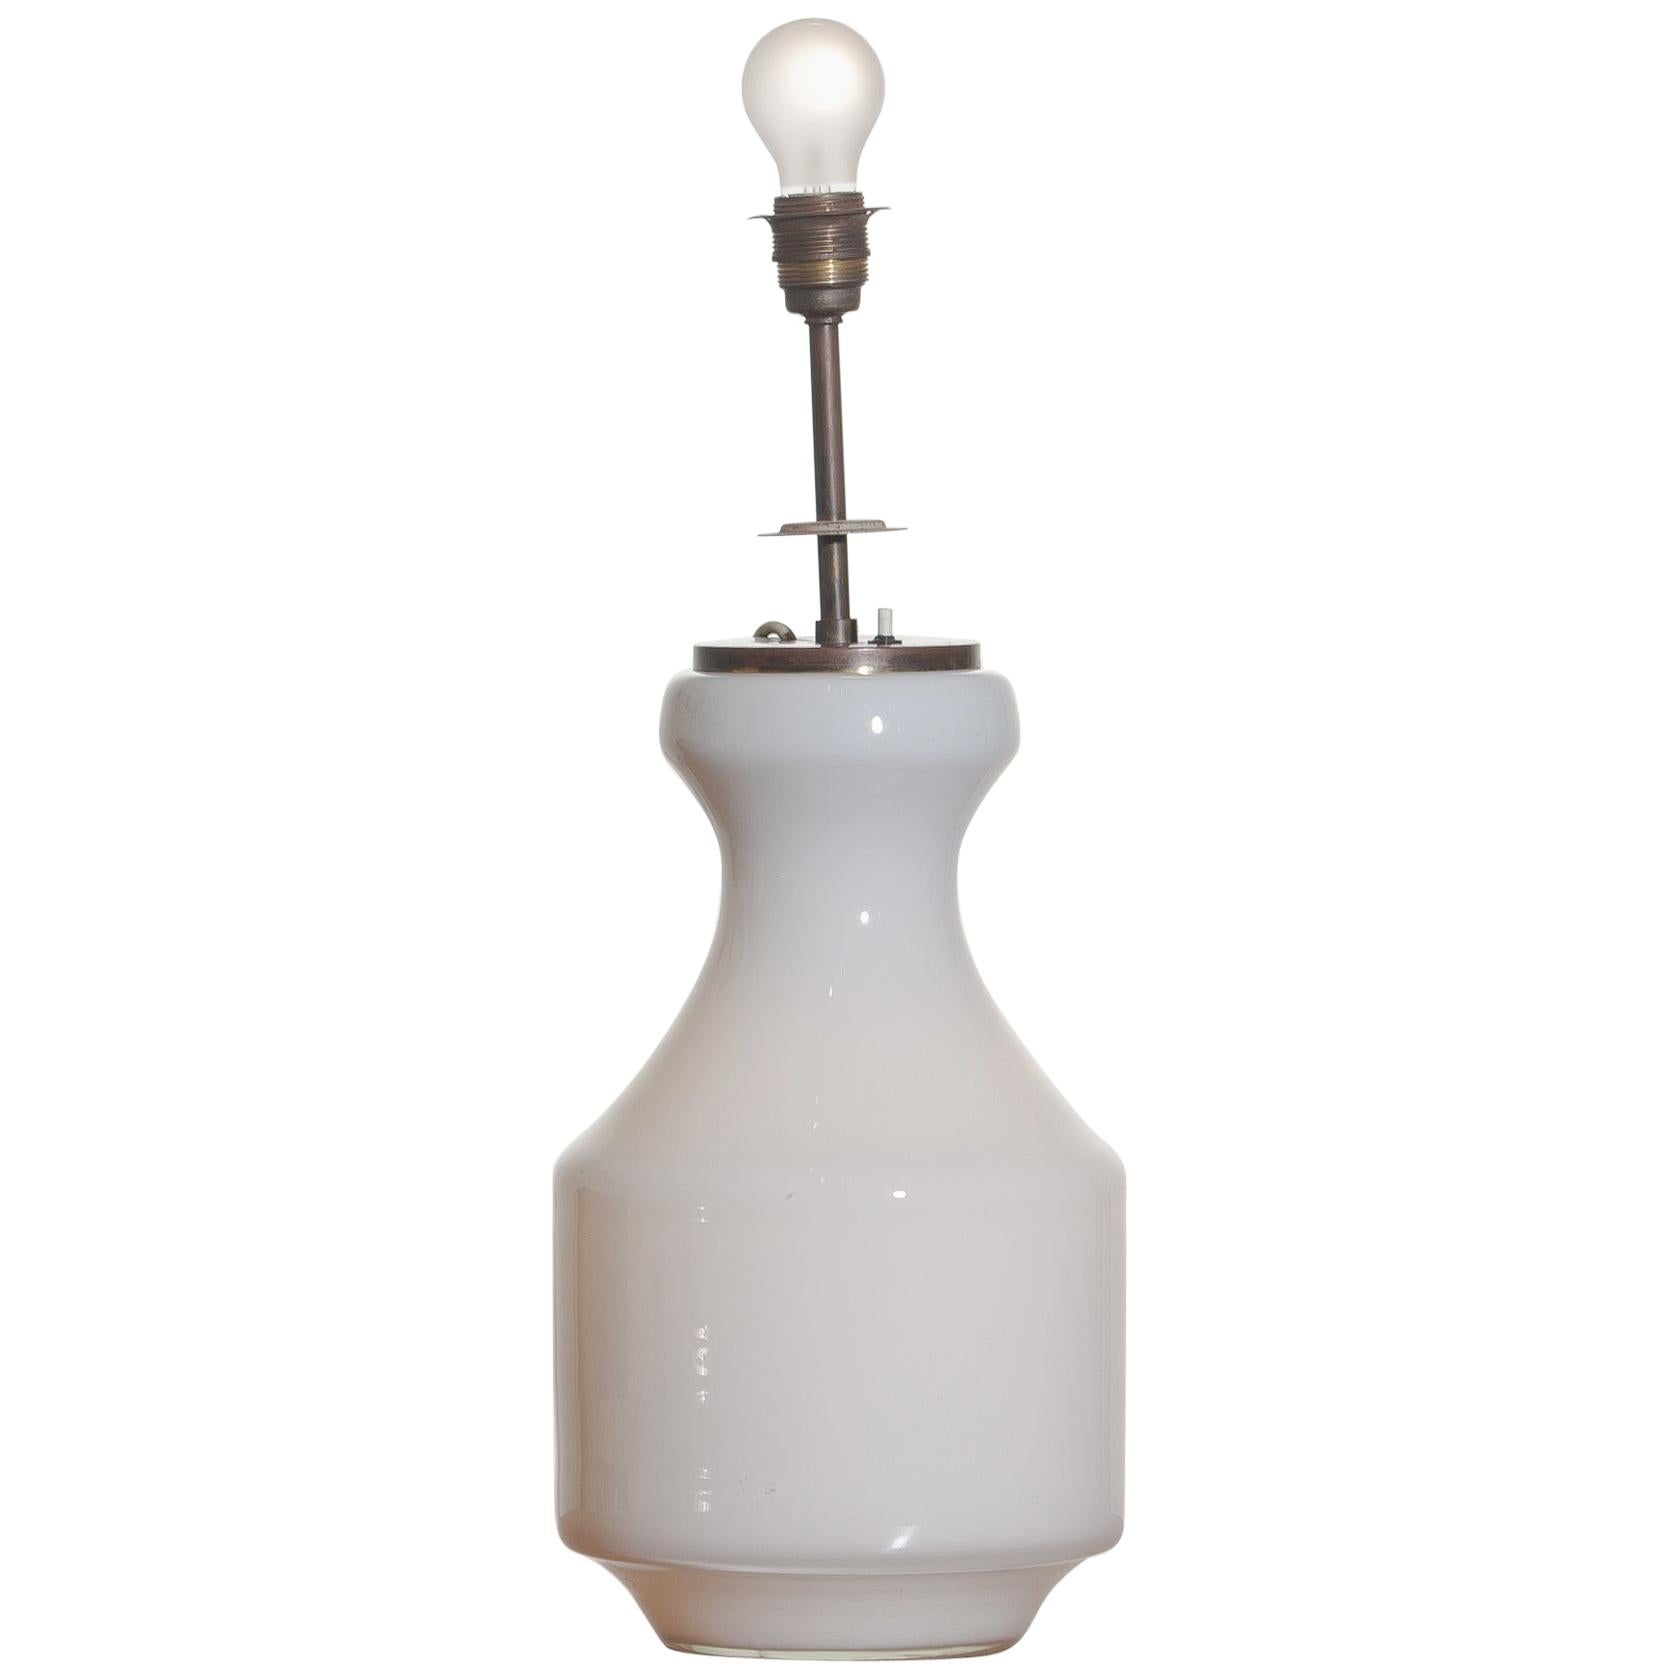 1950s, White Glass Vase Table / Floor Lamp with Internal Lighting by Murano